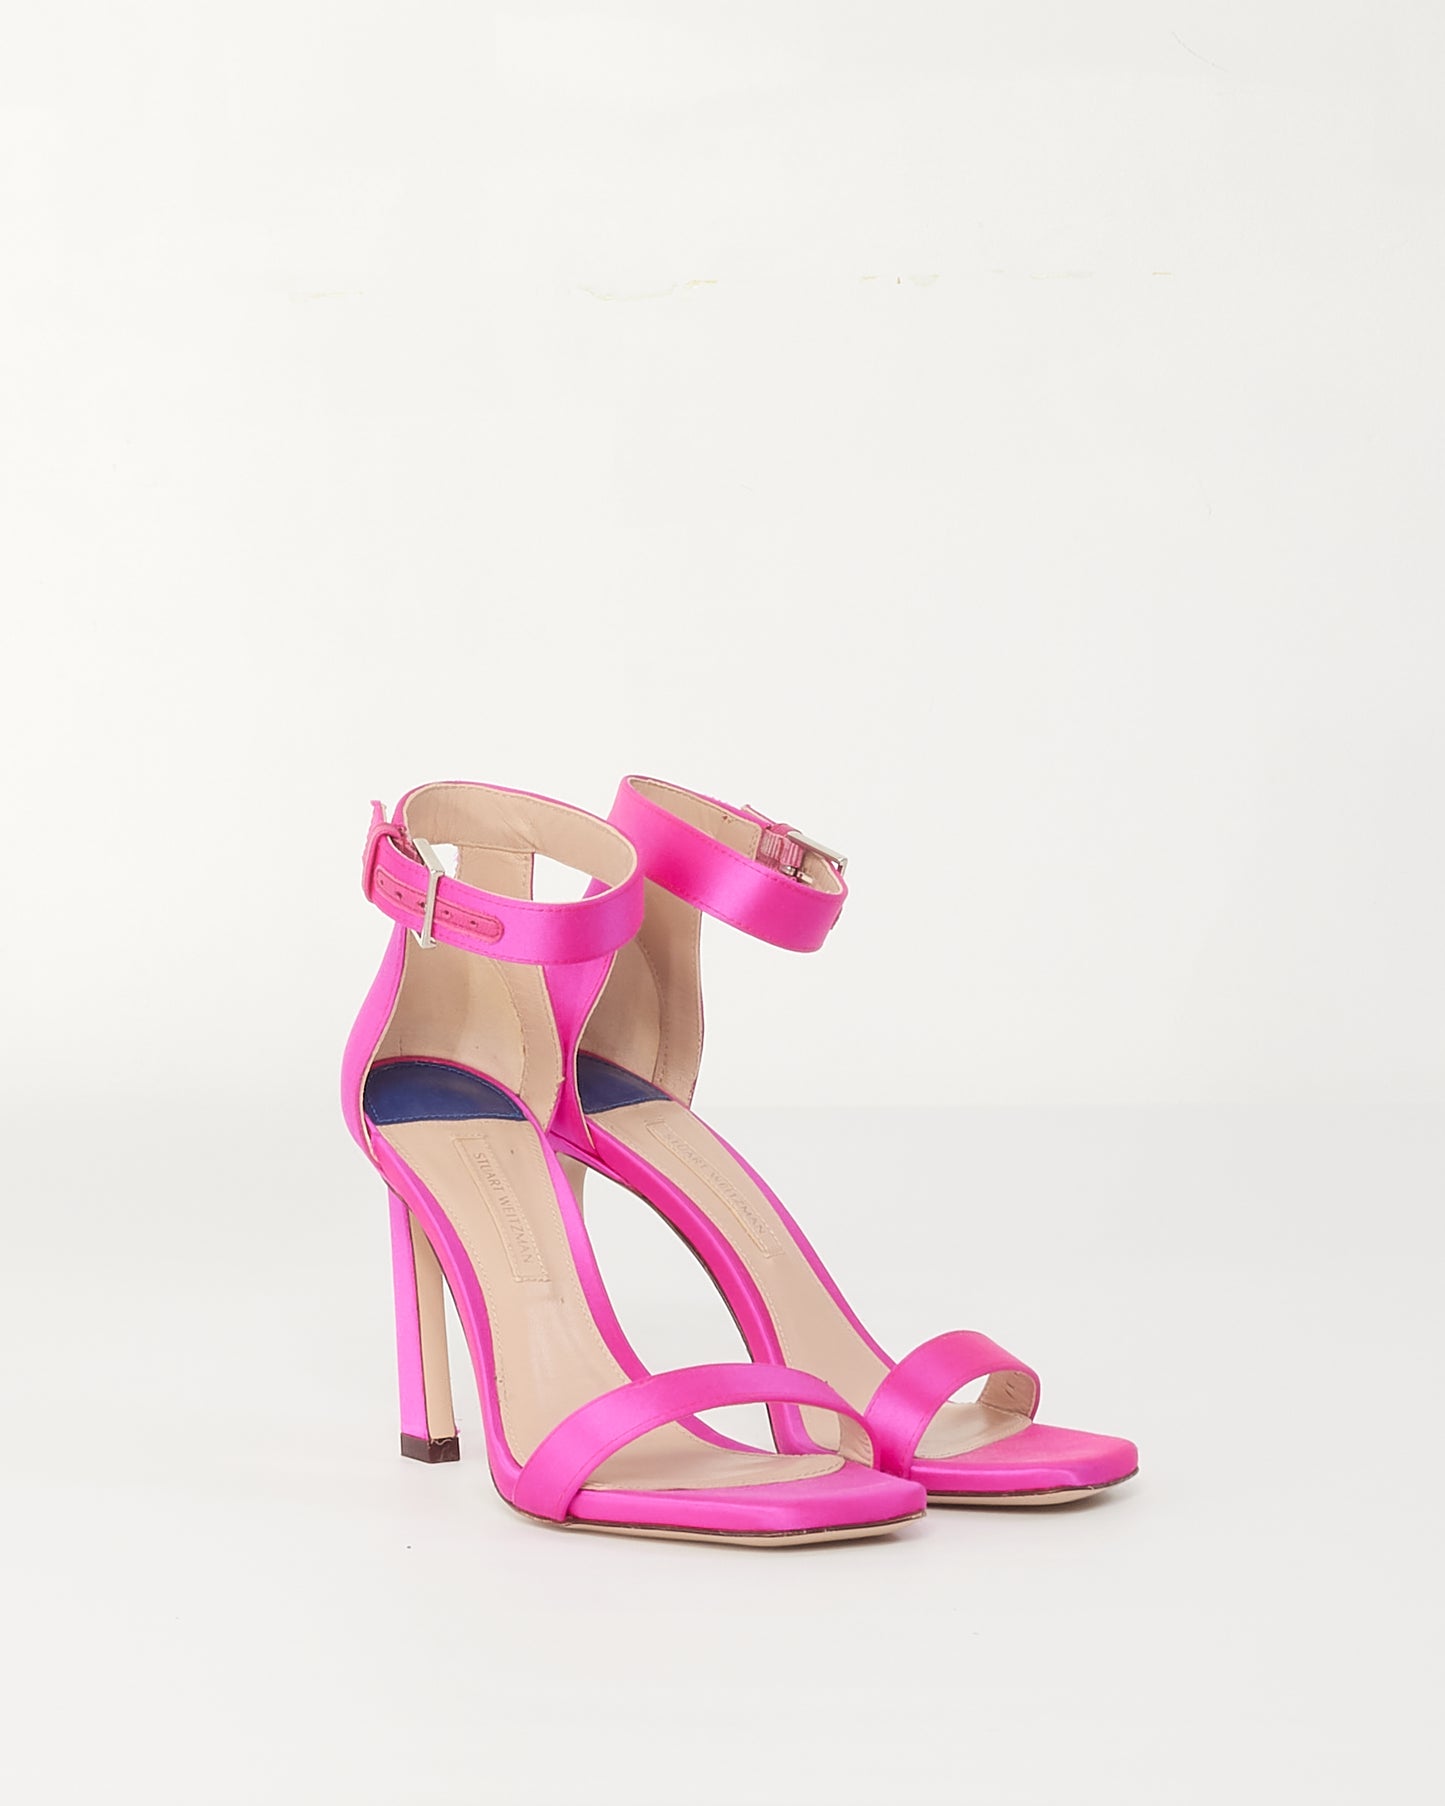 Stuart Weitzman Fuchsia Pink Satin Heel Sandals - 36